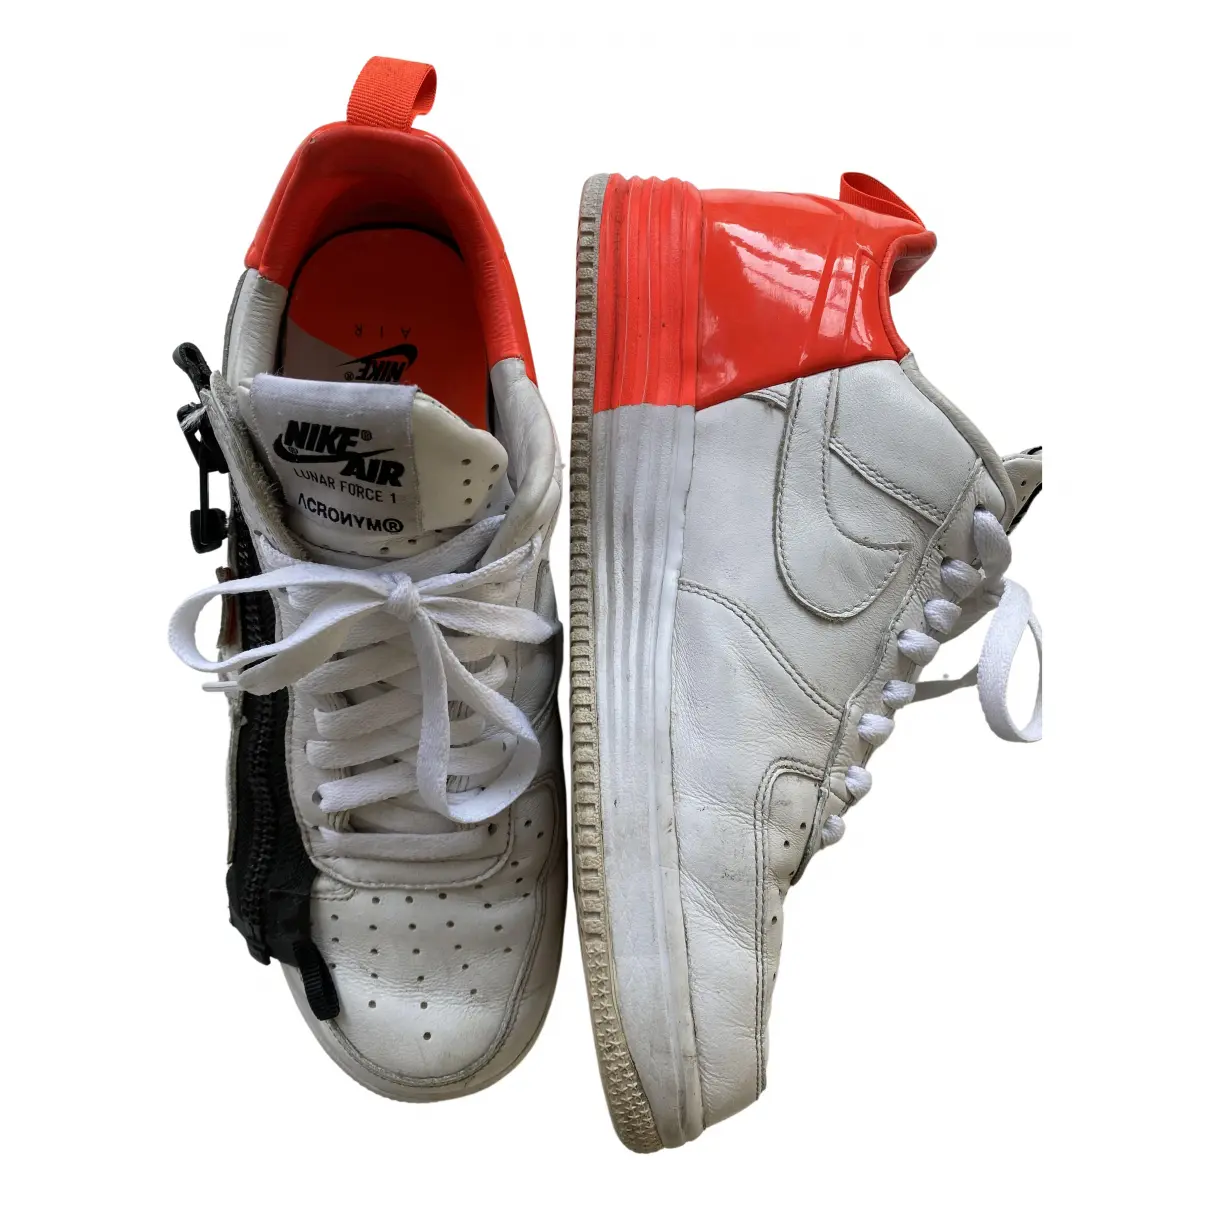 Lunar Force 1 SP leather low trainers Nike x Acronym